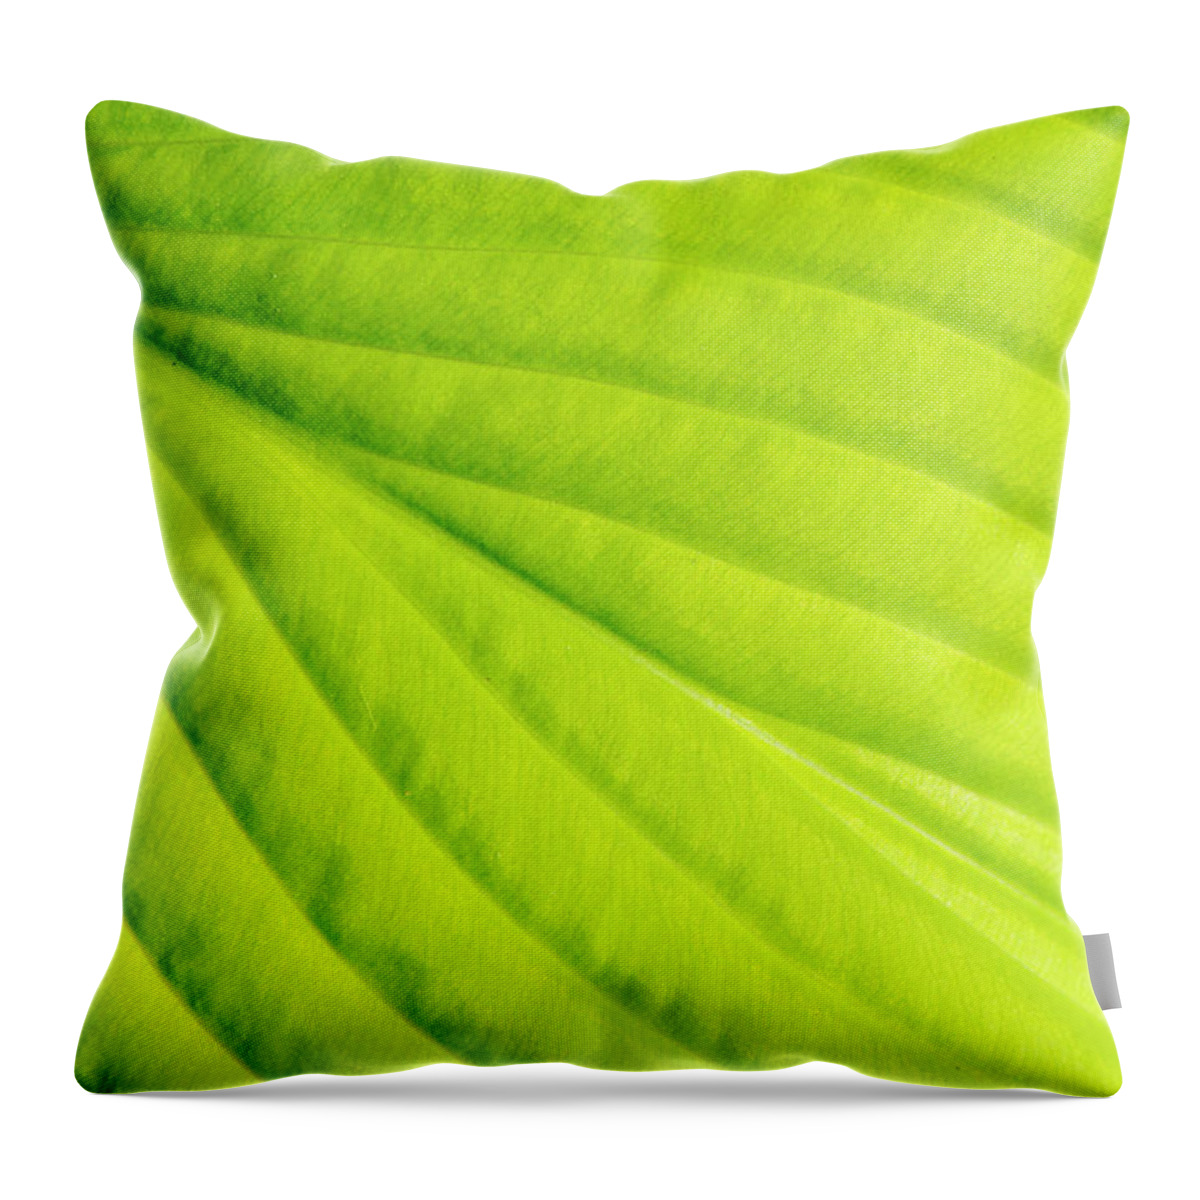 Hosta Throw Pillow featuring the photograph Hosta Leaf Detail by Karen Smale